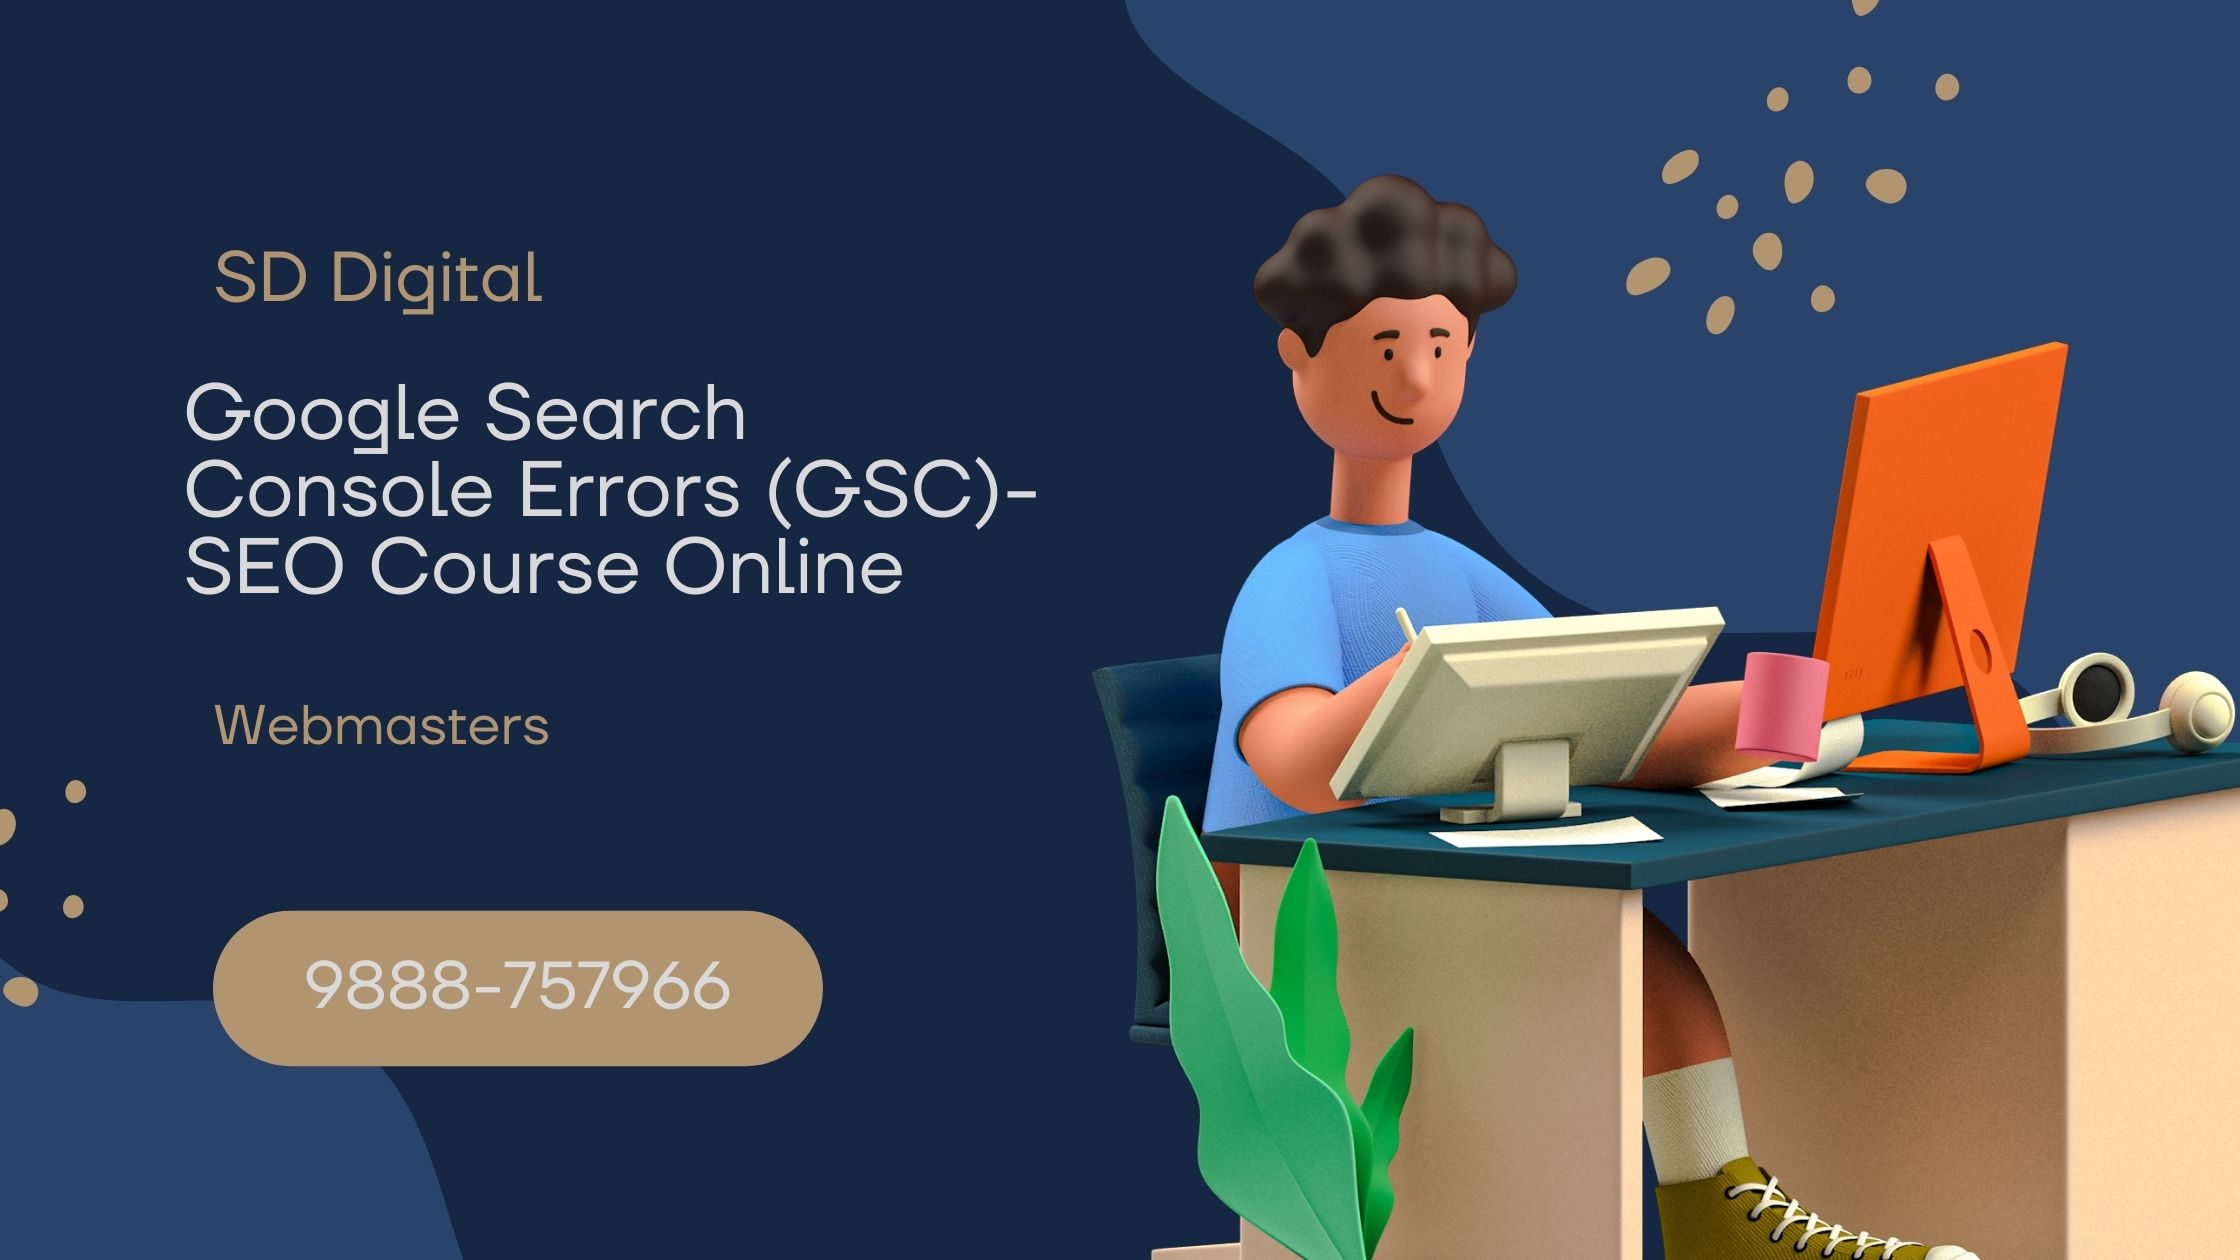 Google Search Console Errors (GSC)- SEO Course Online